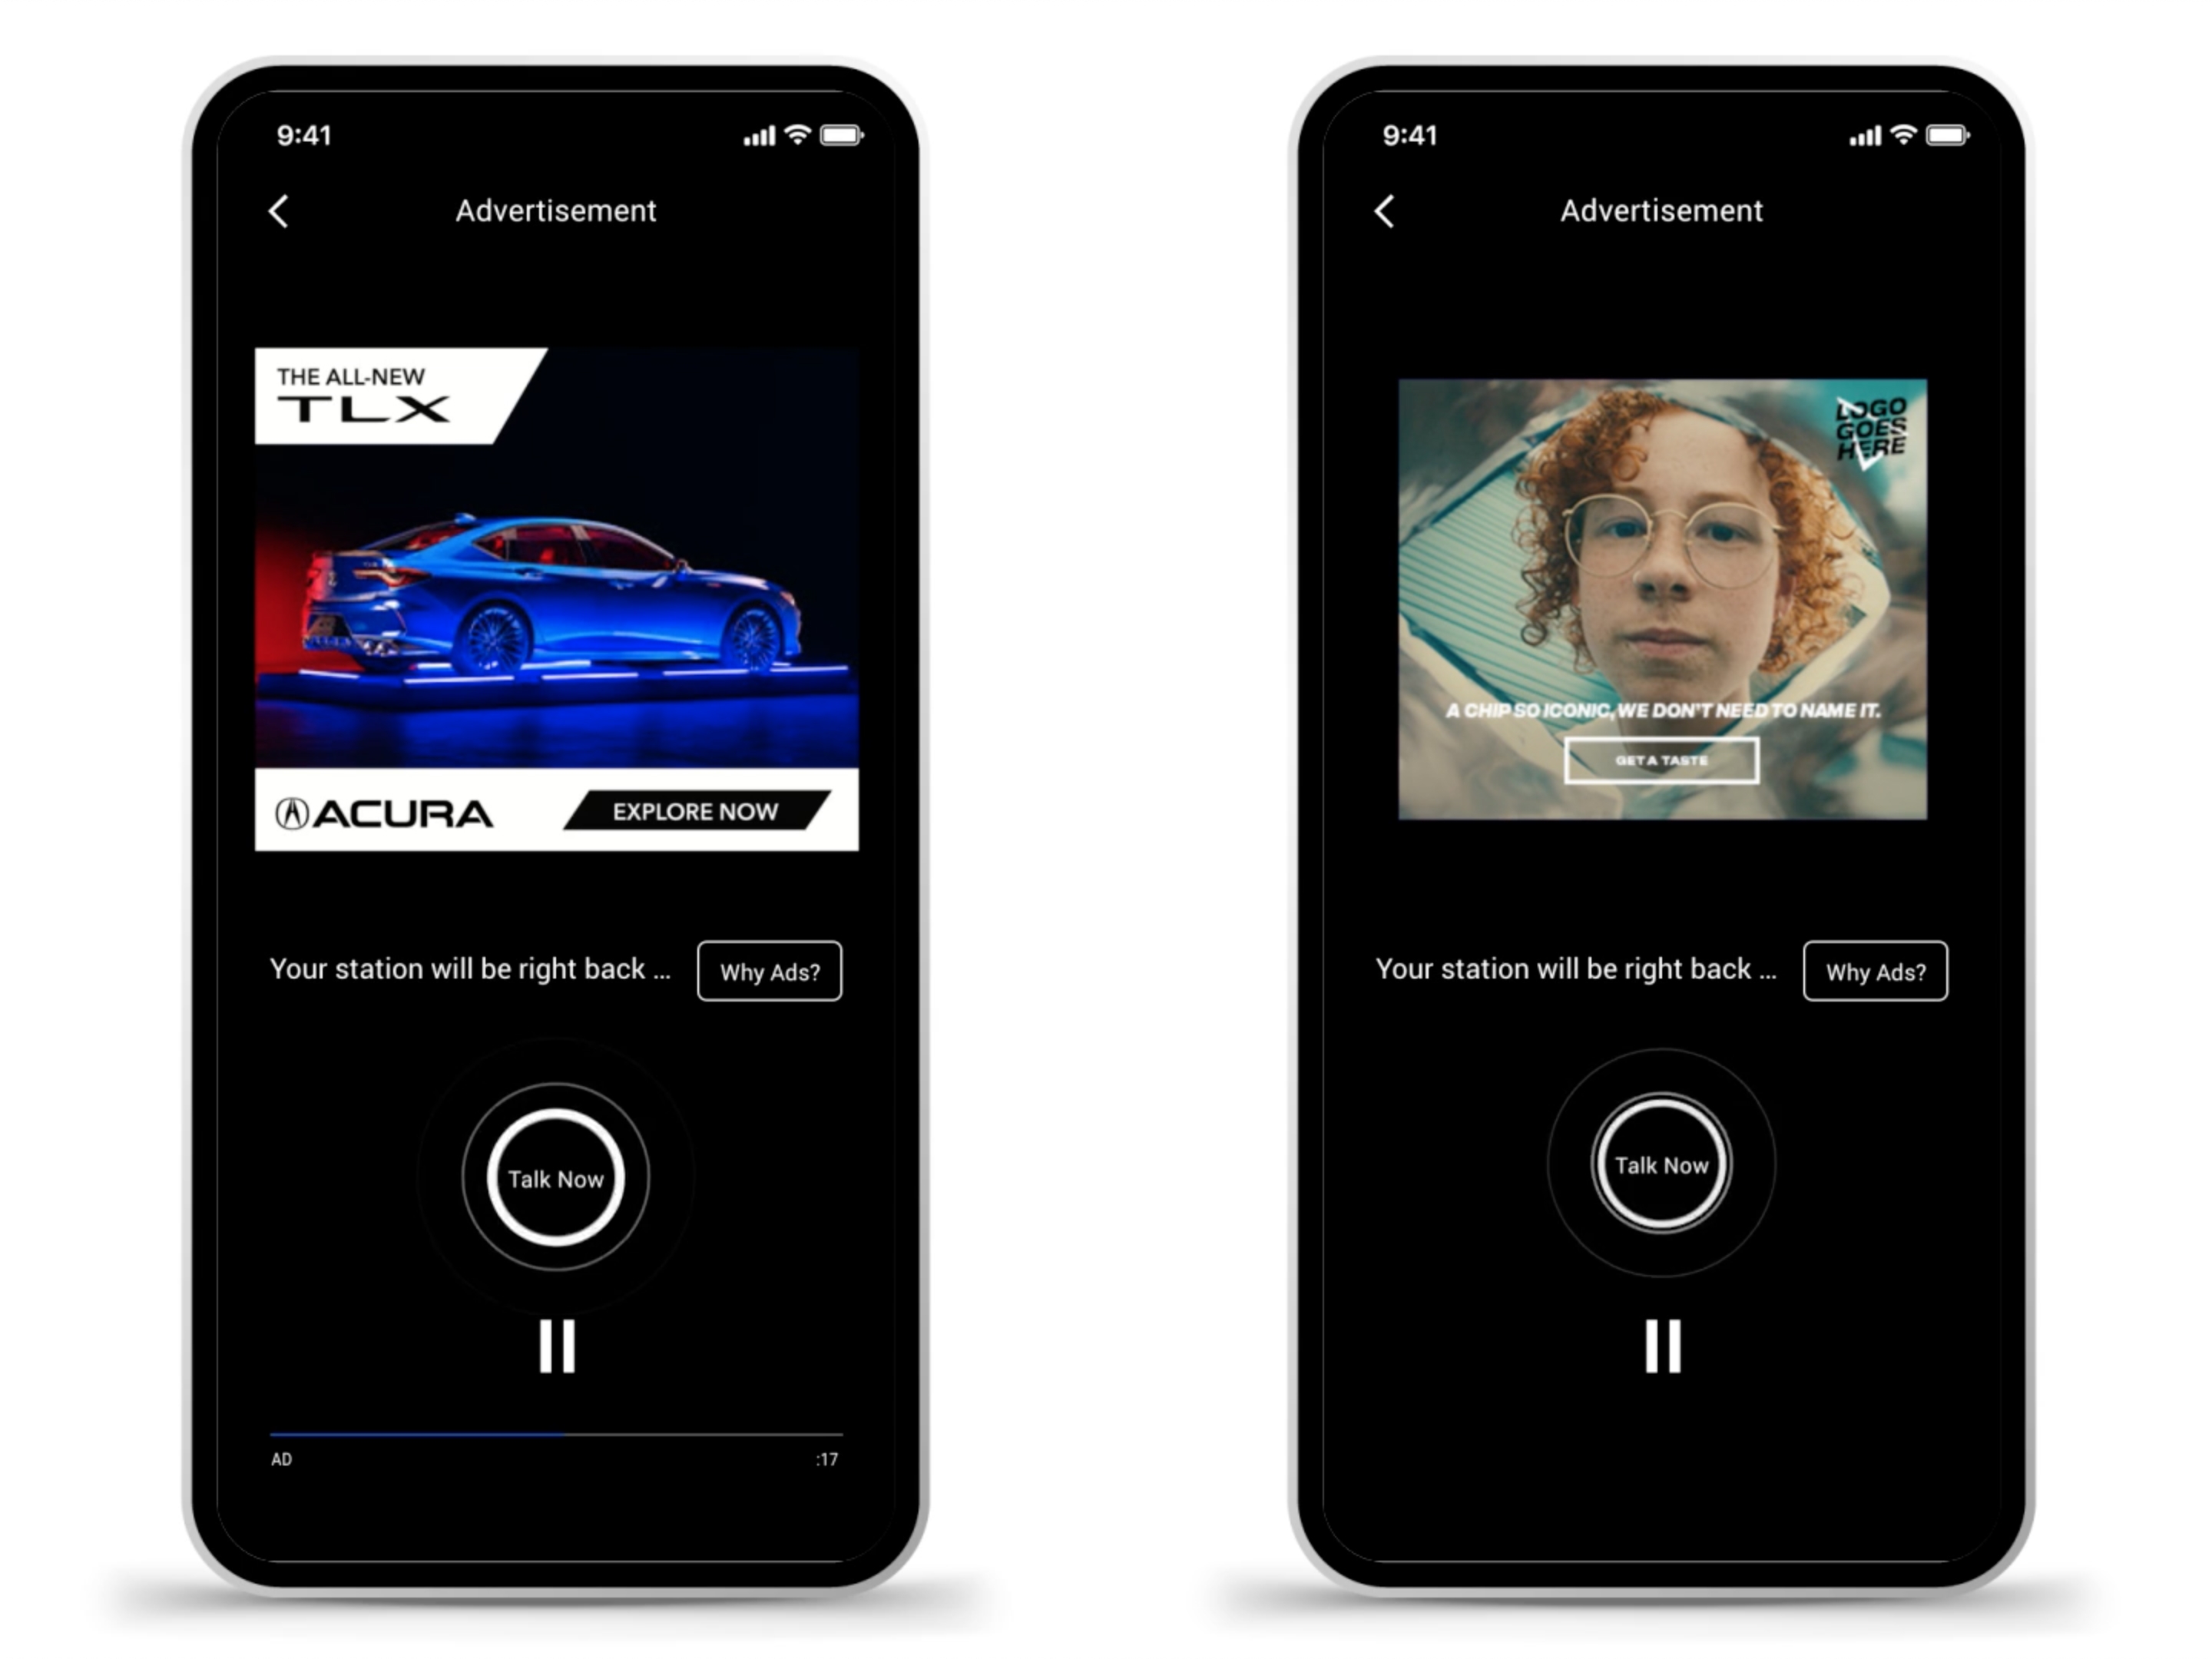 Pandora are launching Interactive Voice Ads beta